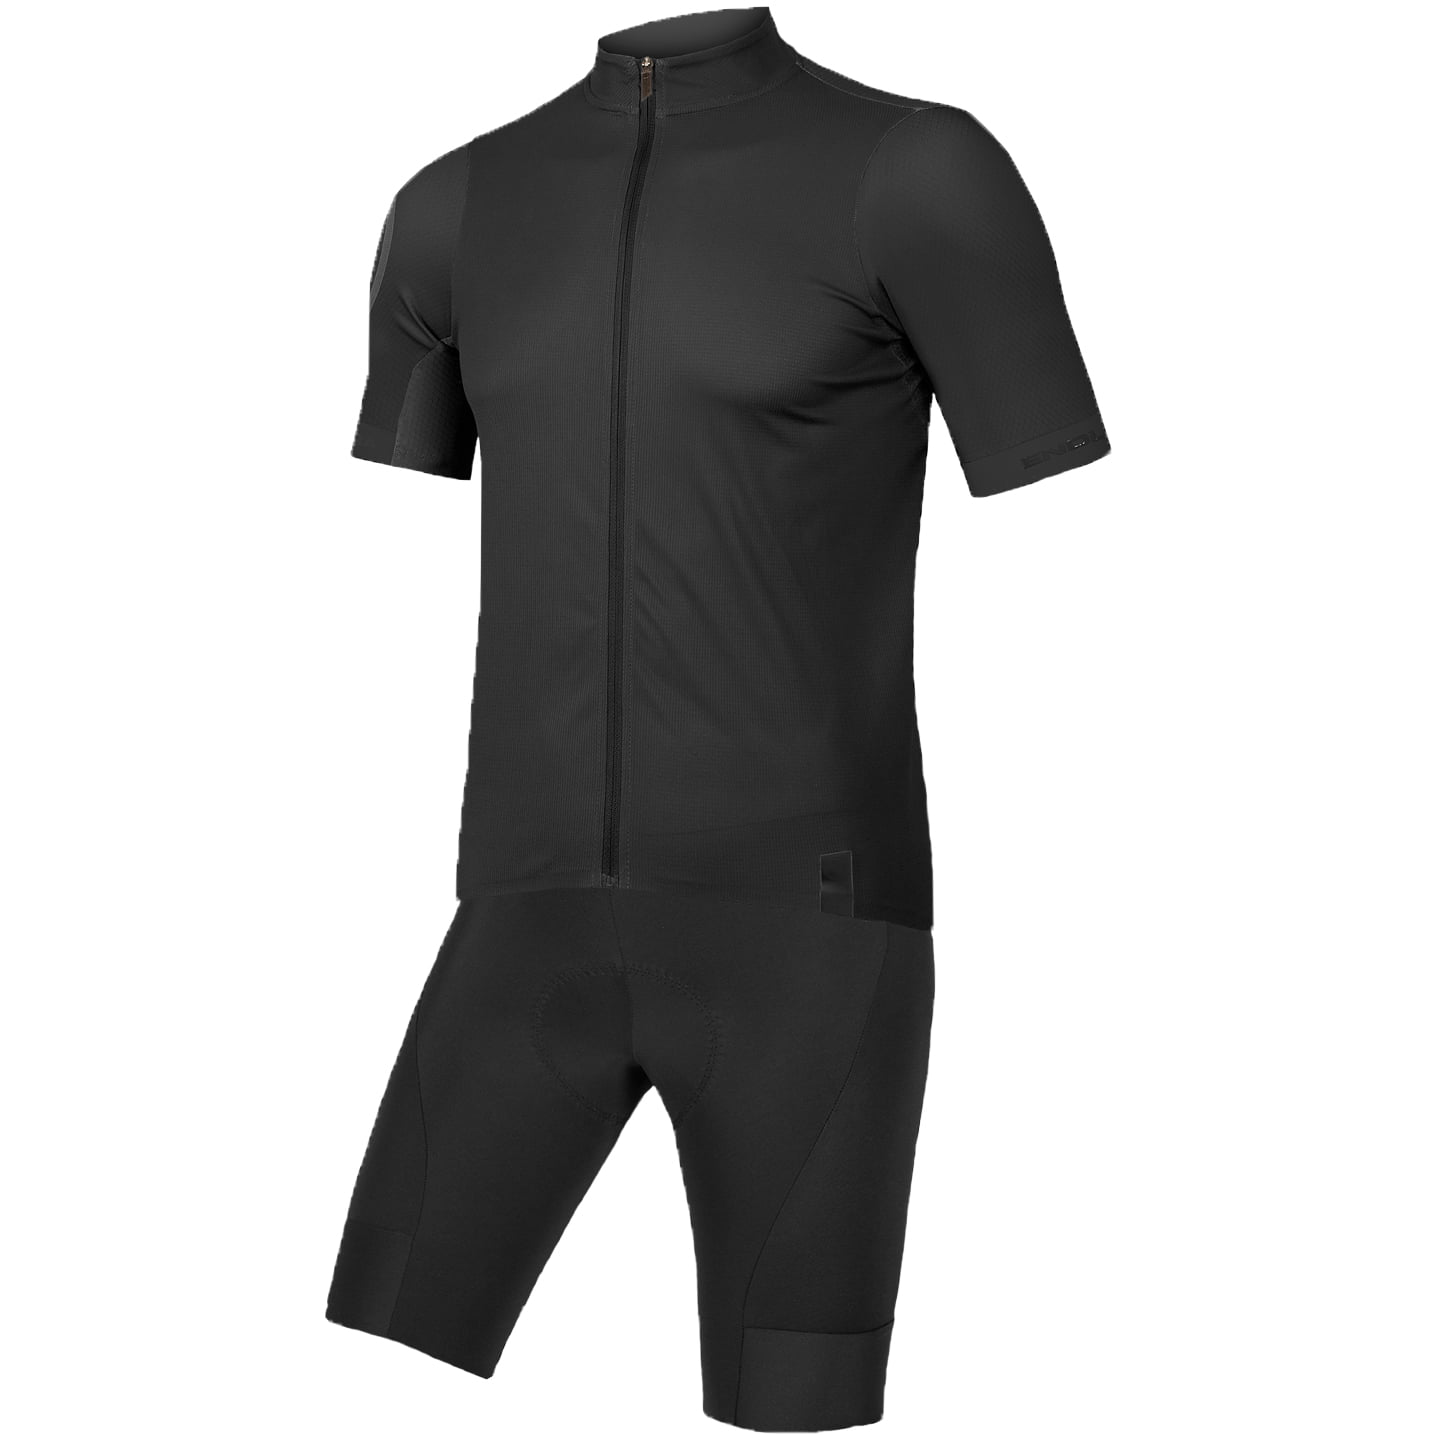 ENDURA FS260 Set (cycling jersey + cycling shorts) Set (2 pieces), for men